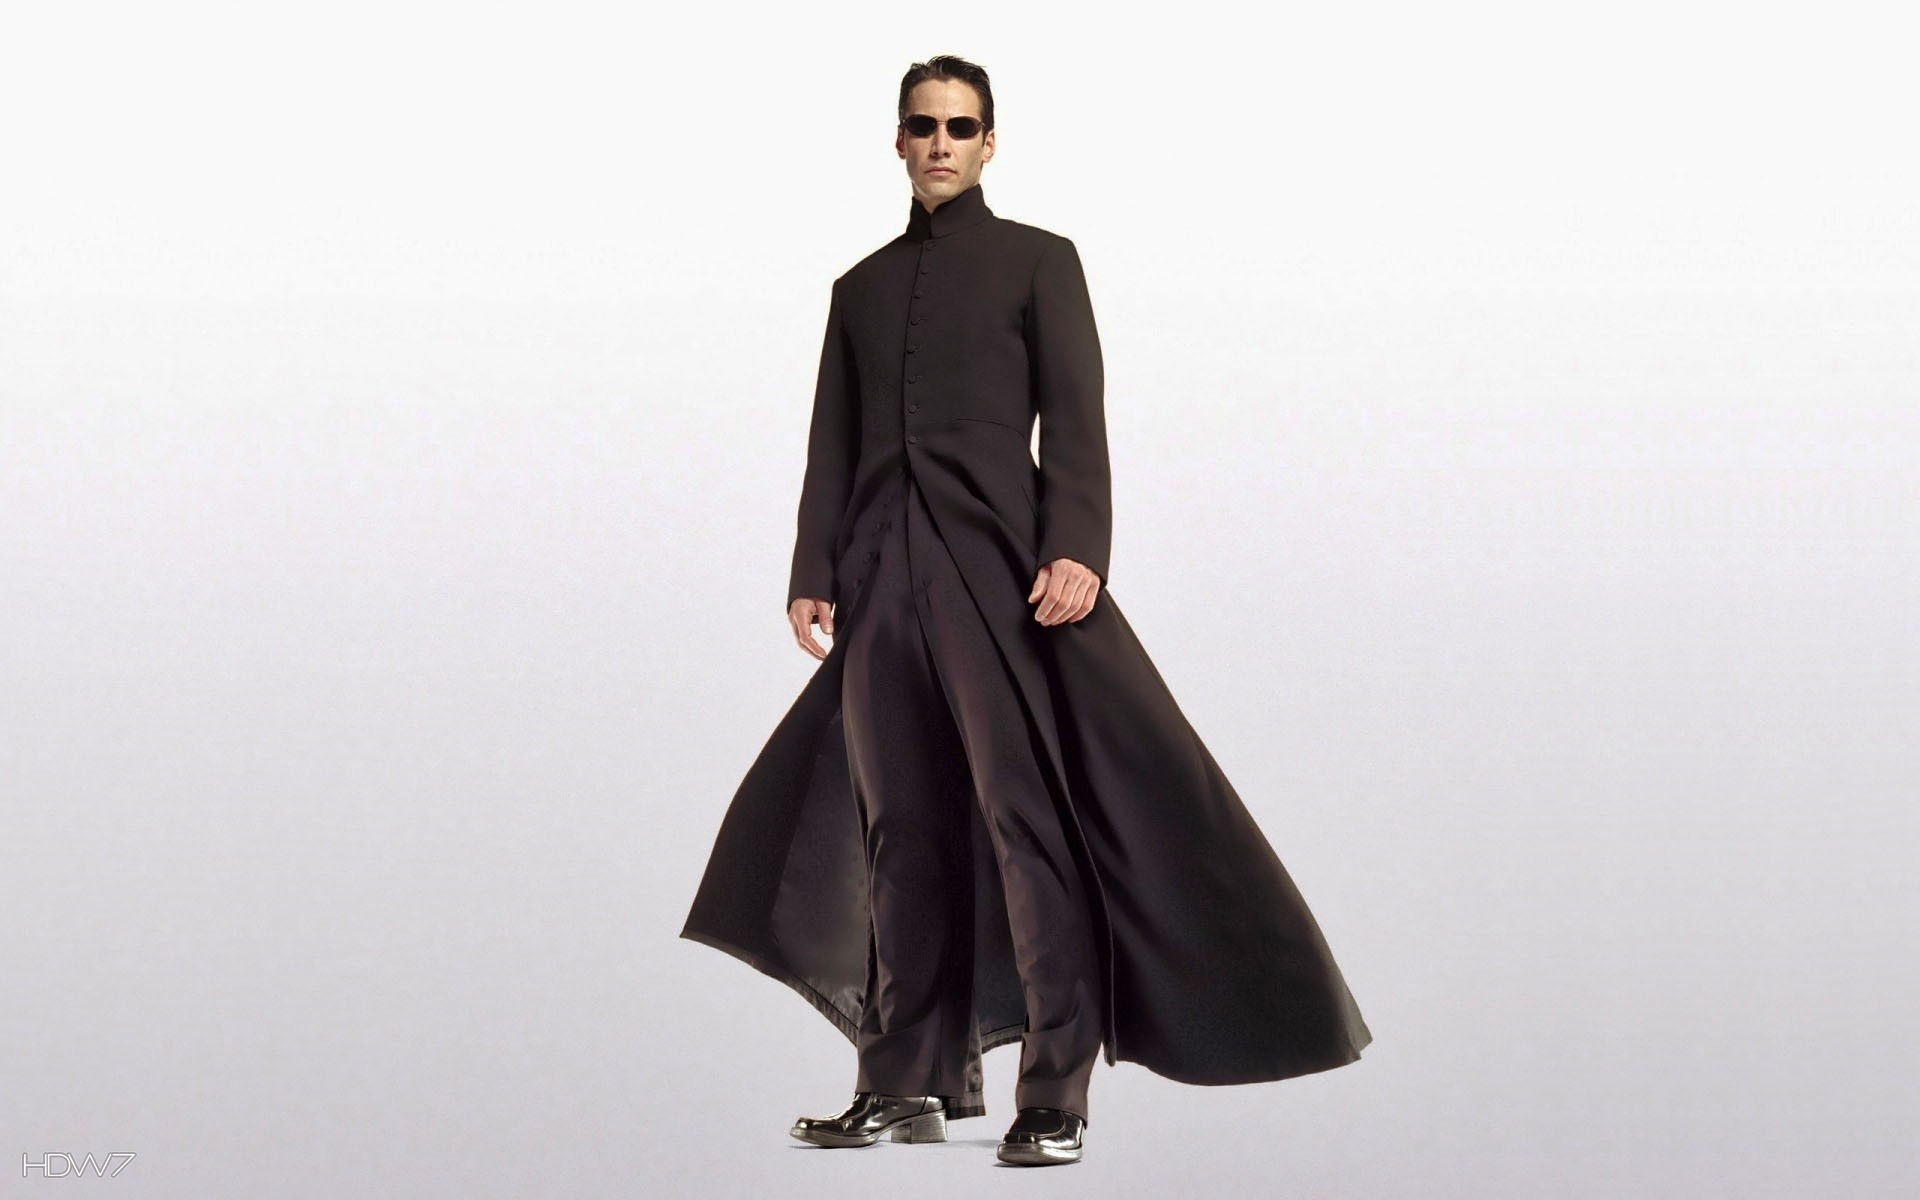 Neo Keanu Reeves - Neo The Matrix Reloaded - HD Wallpaper 